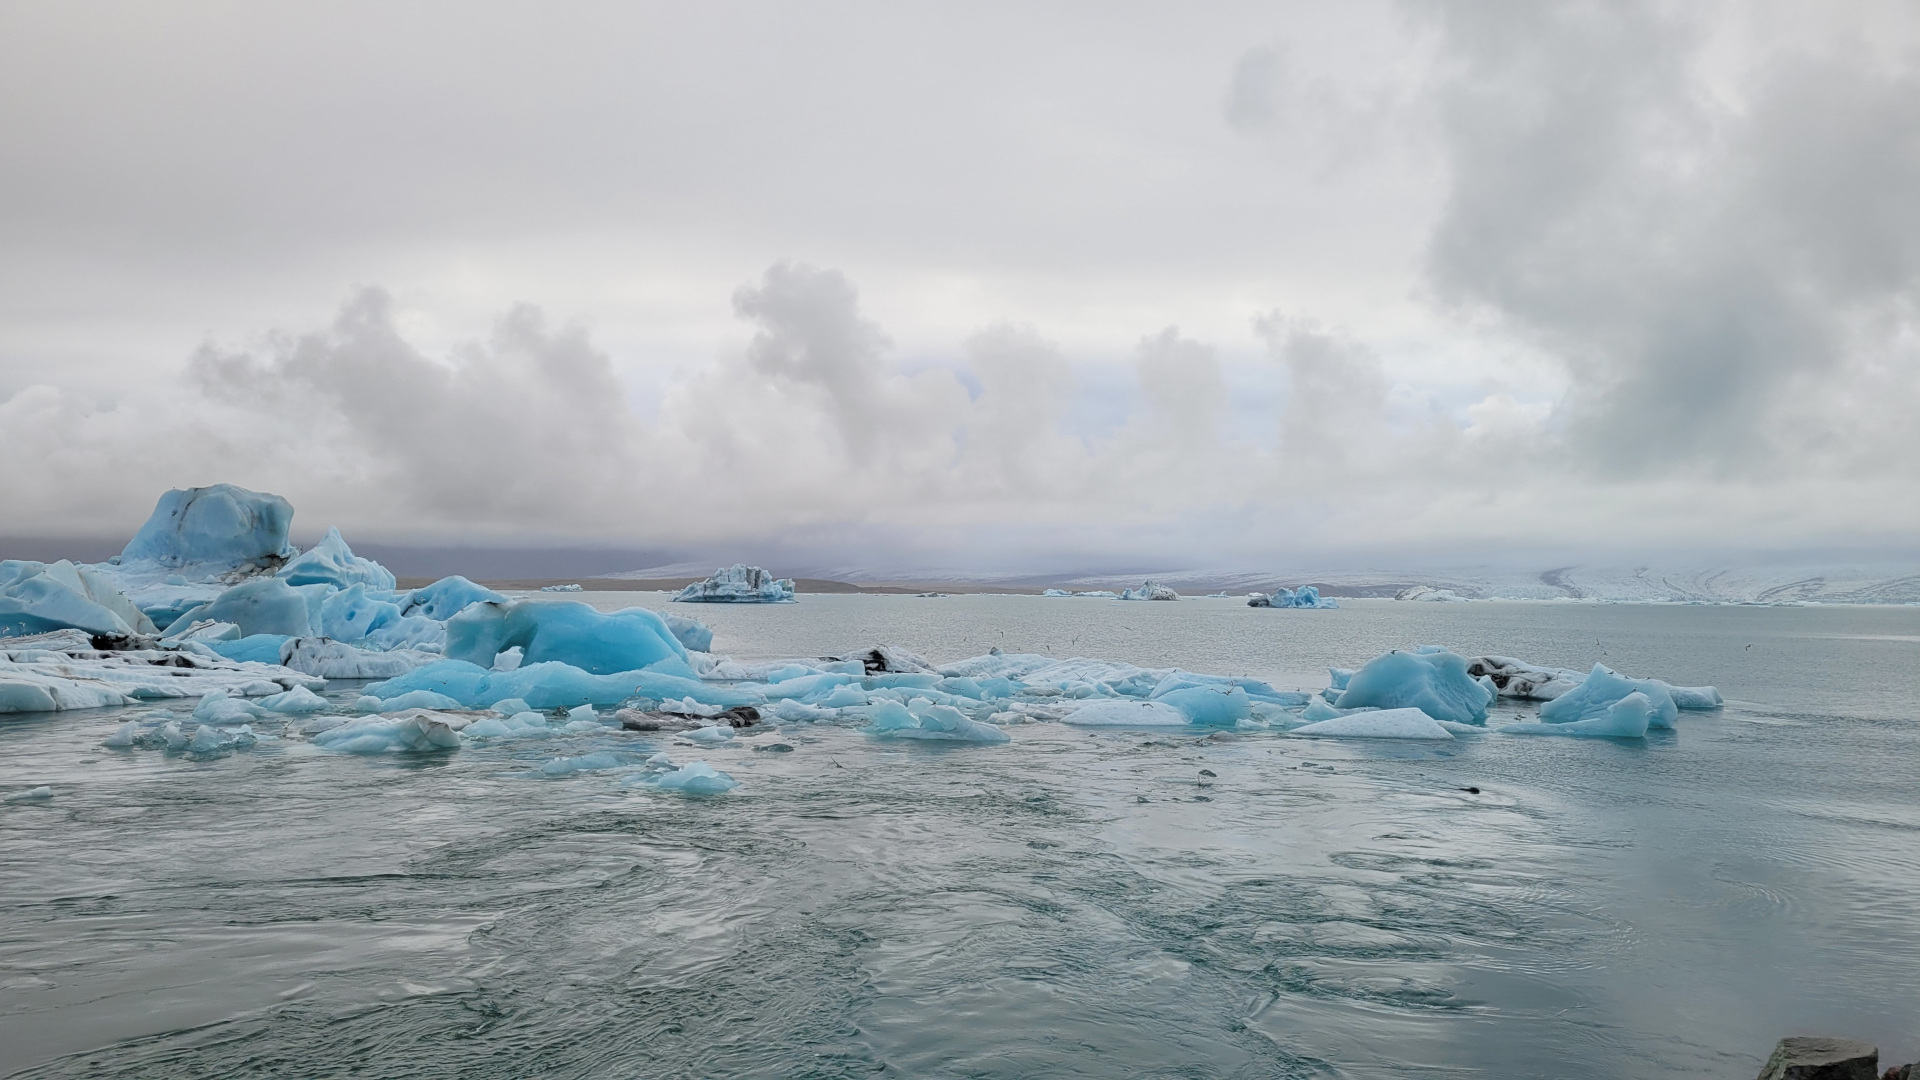 Jokulsarlon glacier lagoon. Icebergs split from the glacier on the background and drift to the sea.